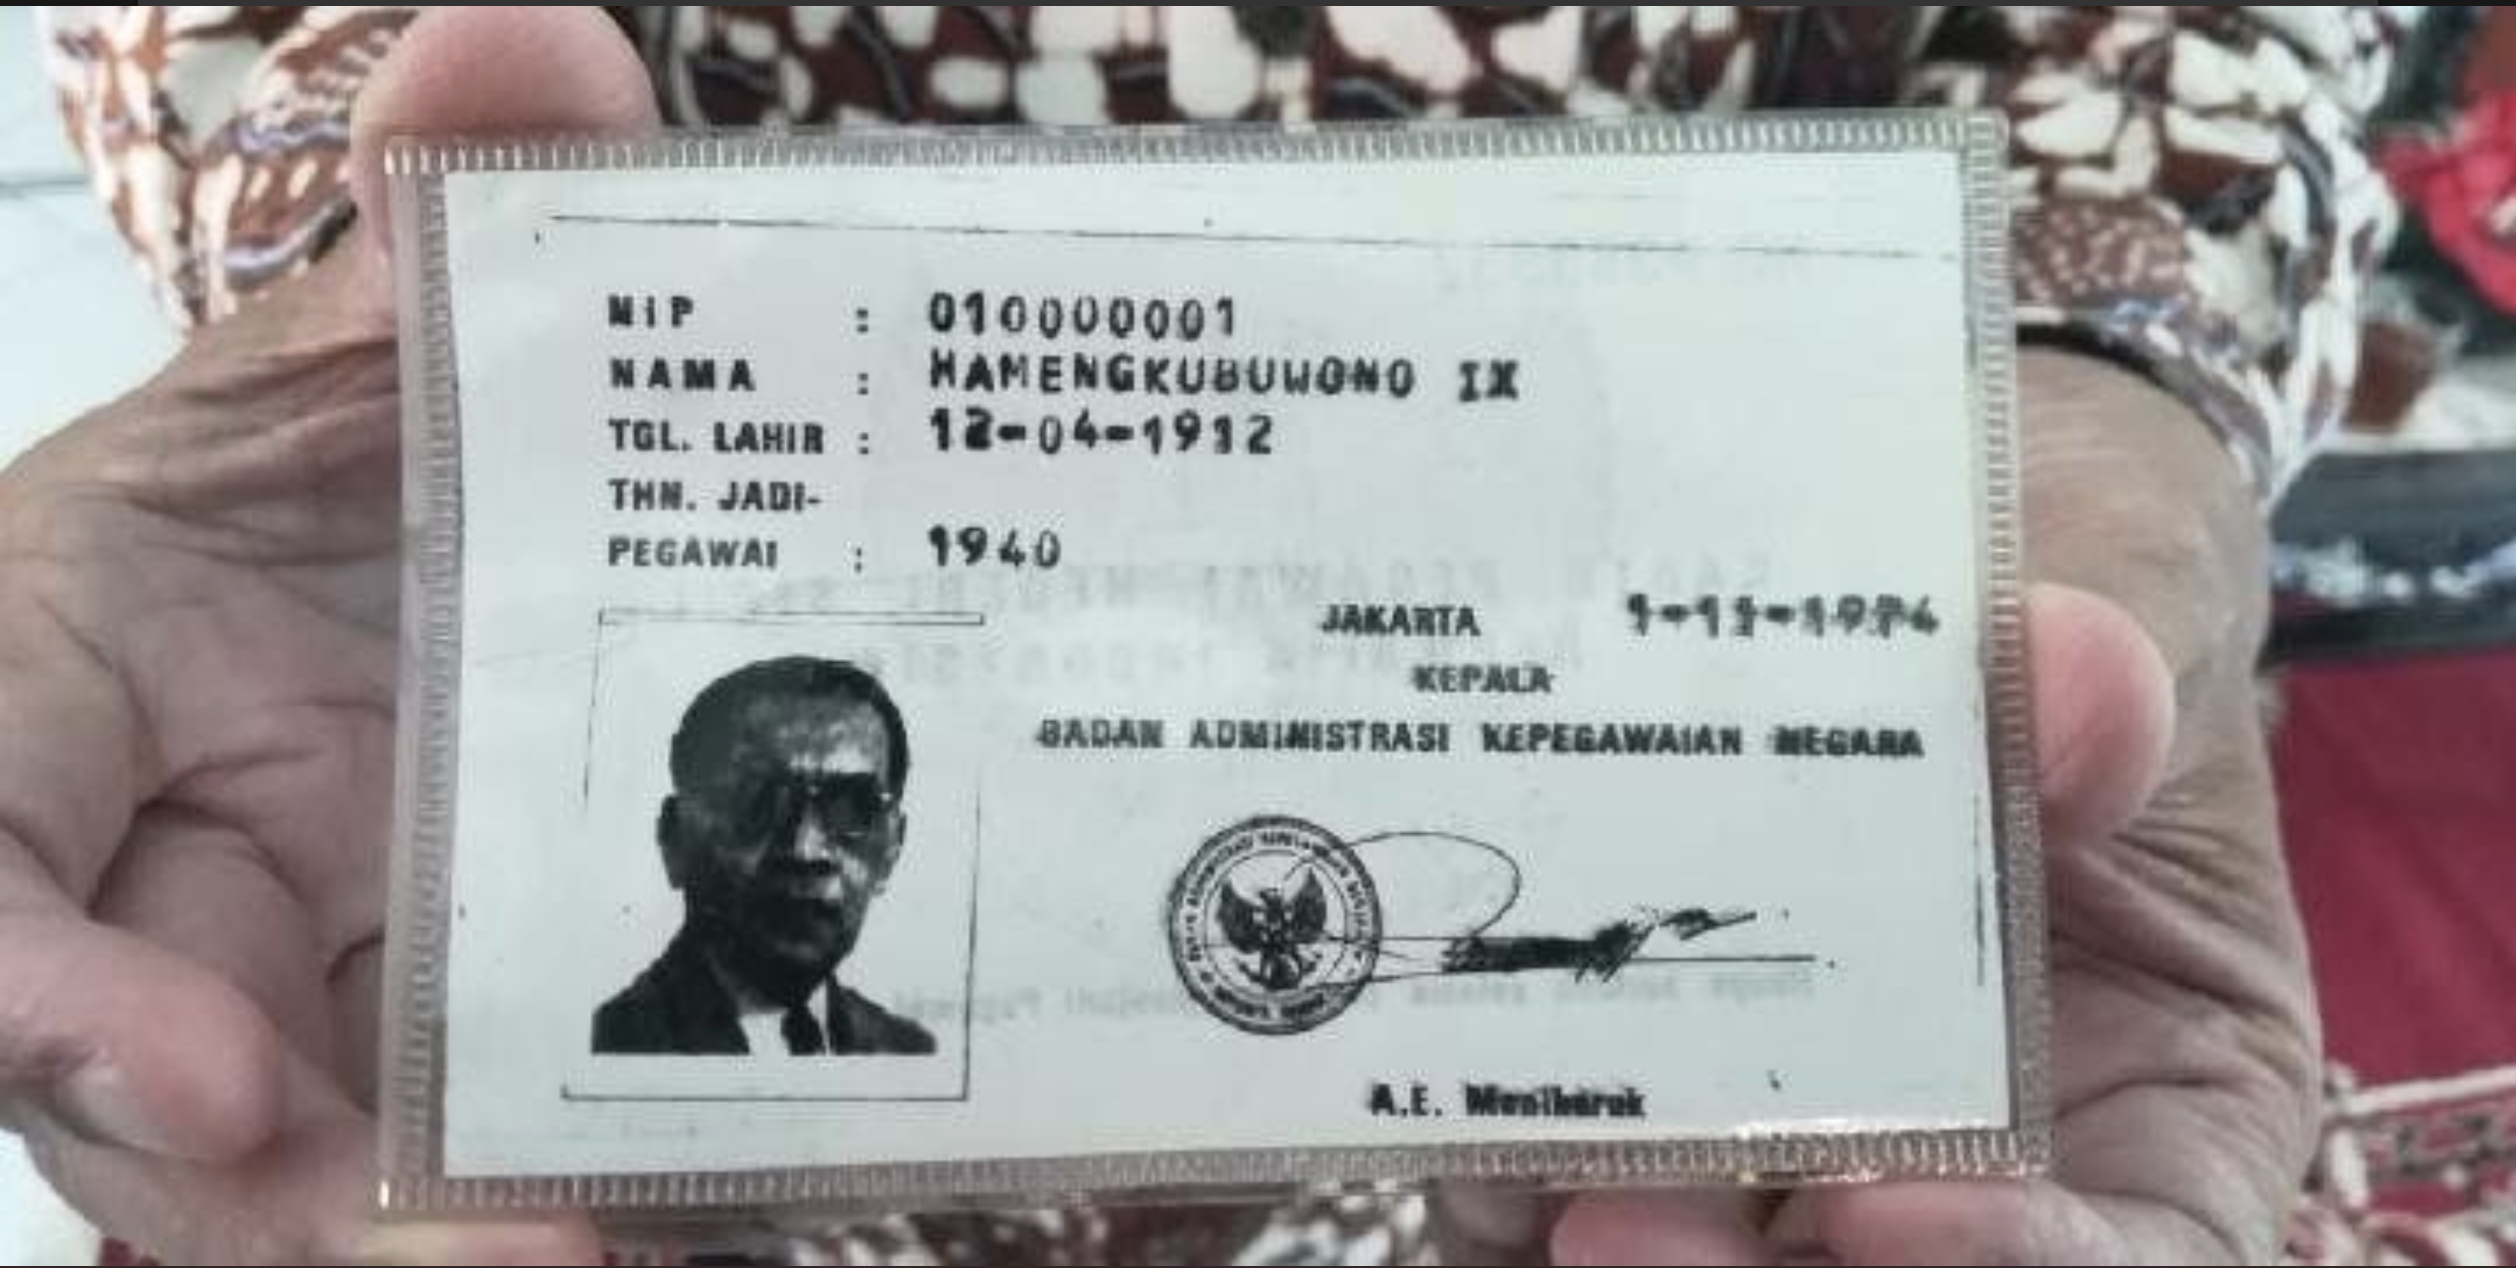 Kartu Pegawai Republik Indonesia milik Sri Sultan Hamengkubuwono IX | Foto : CNBC